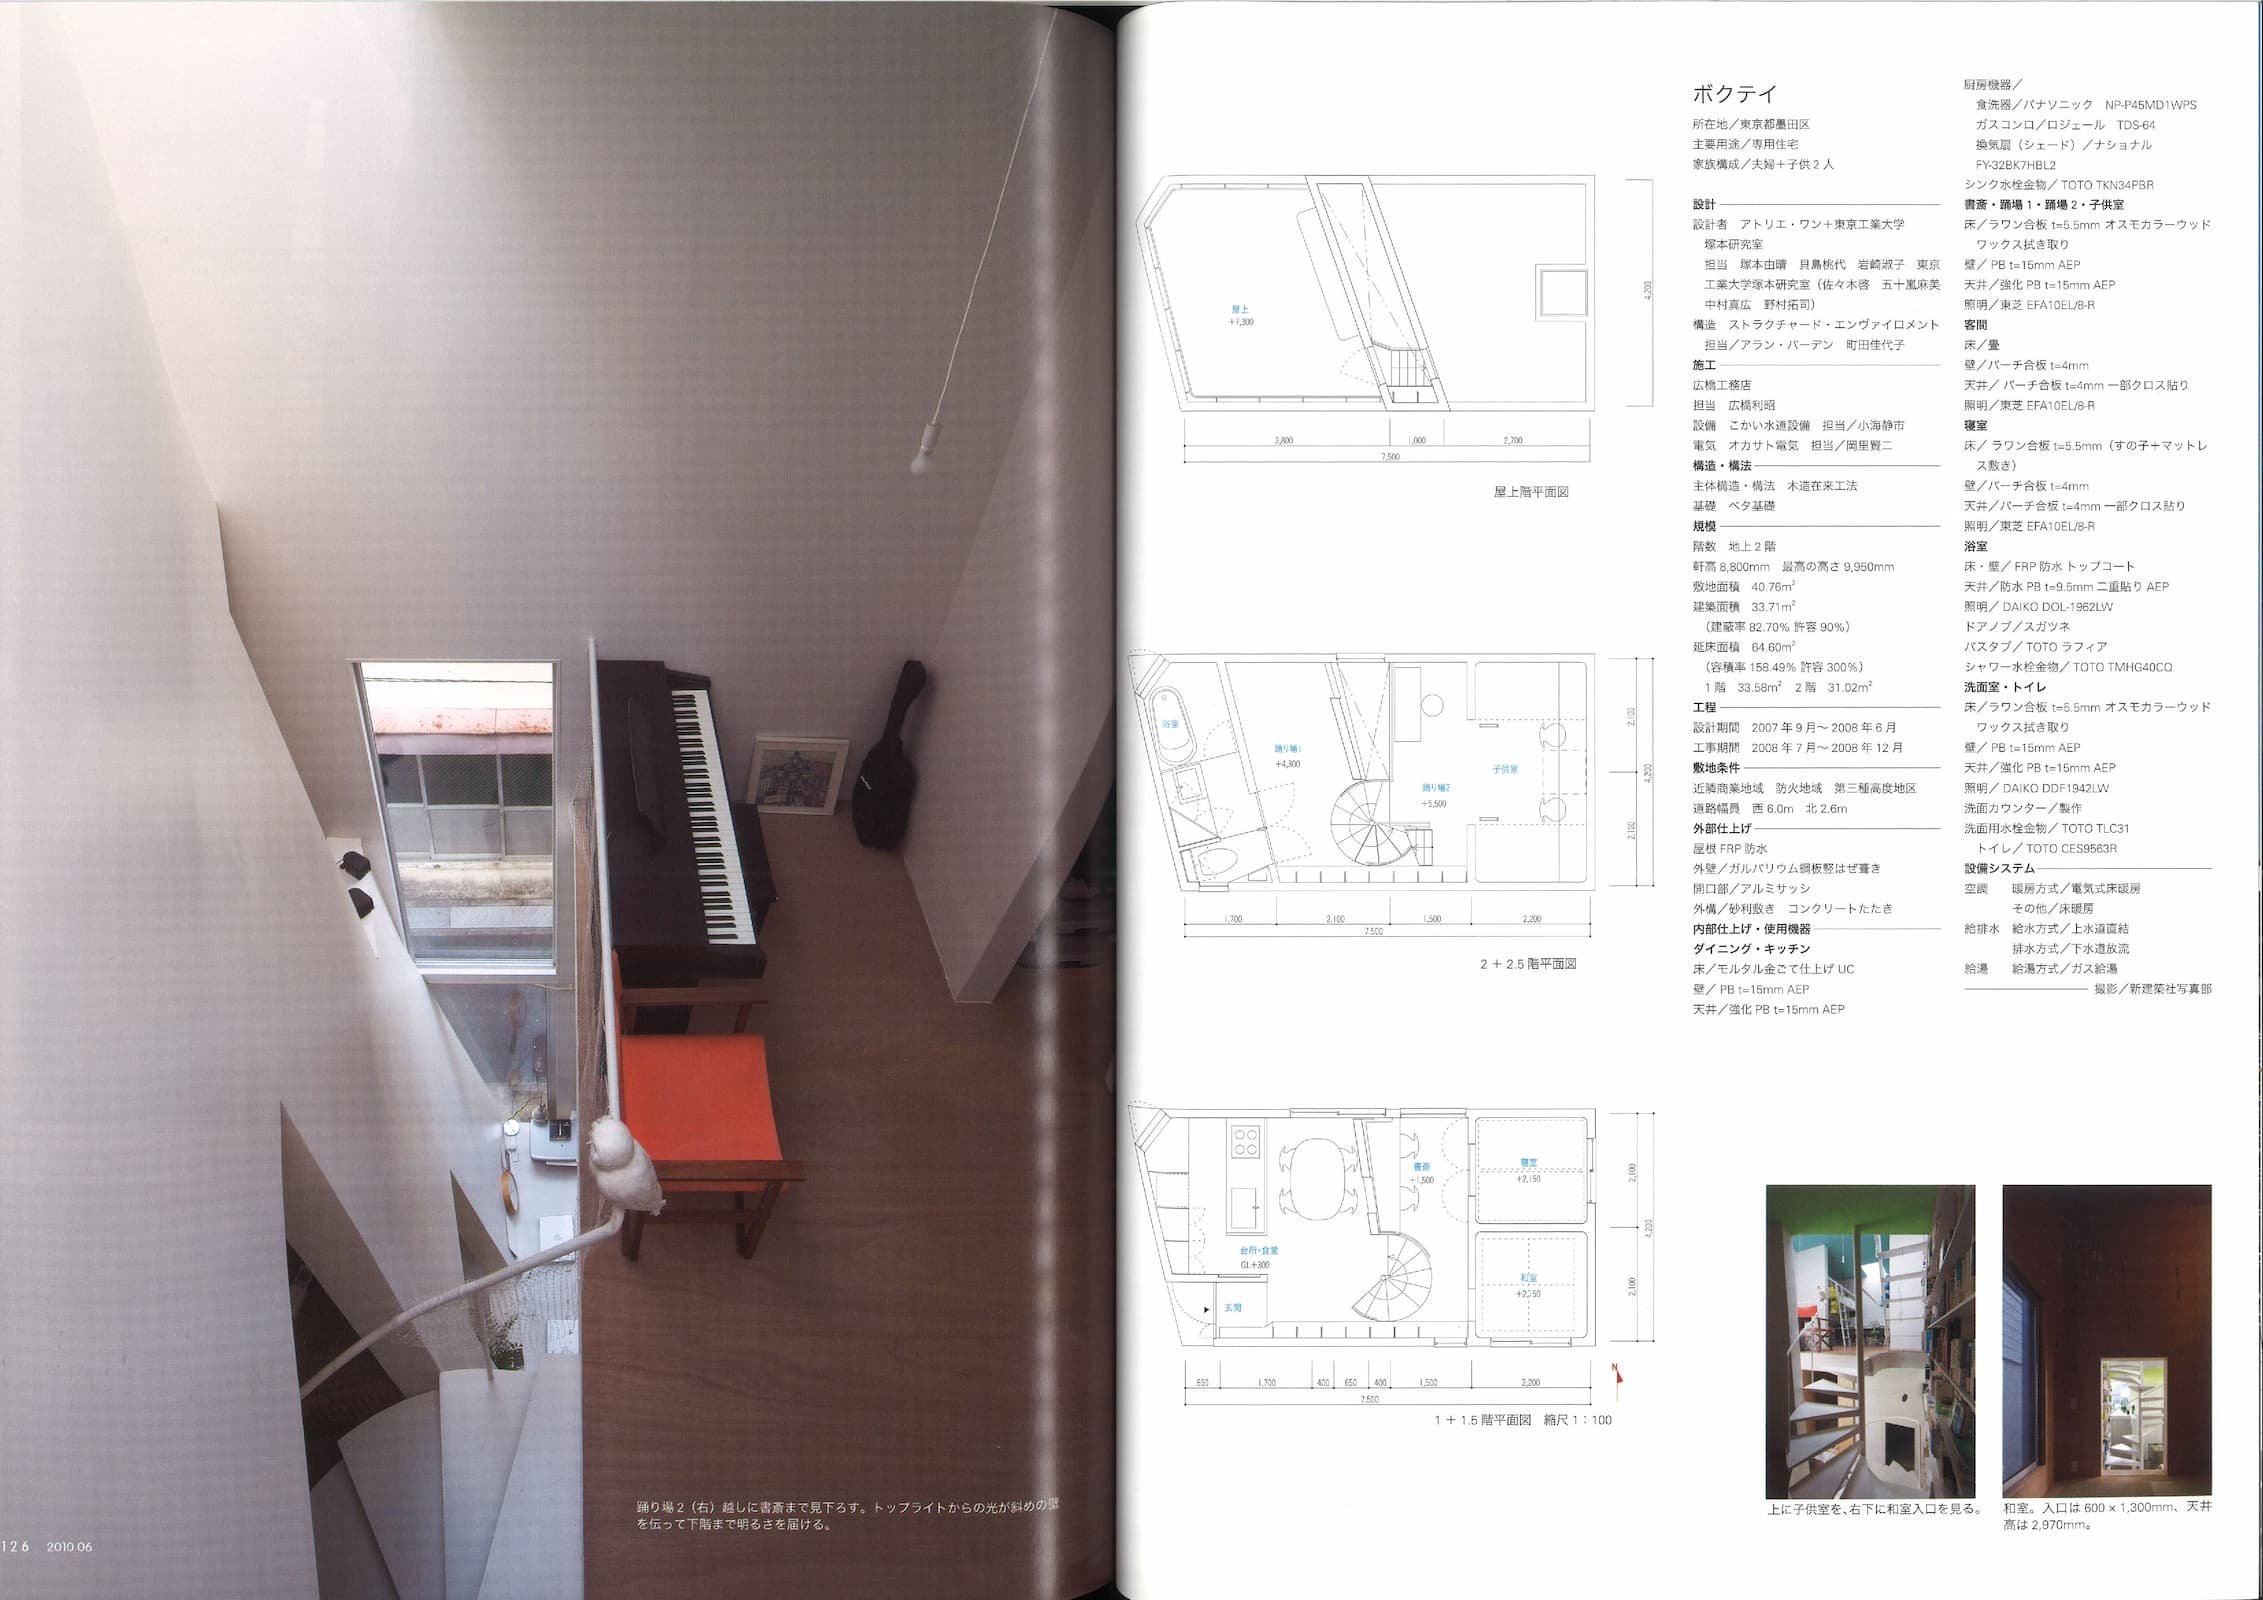 住宅特集 - Housing Special Feature 290 - Bokutei_Page_6.jpg